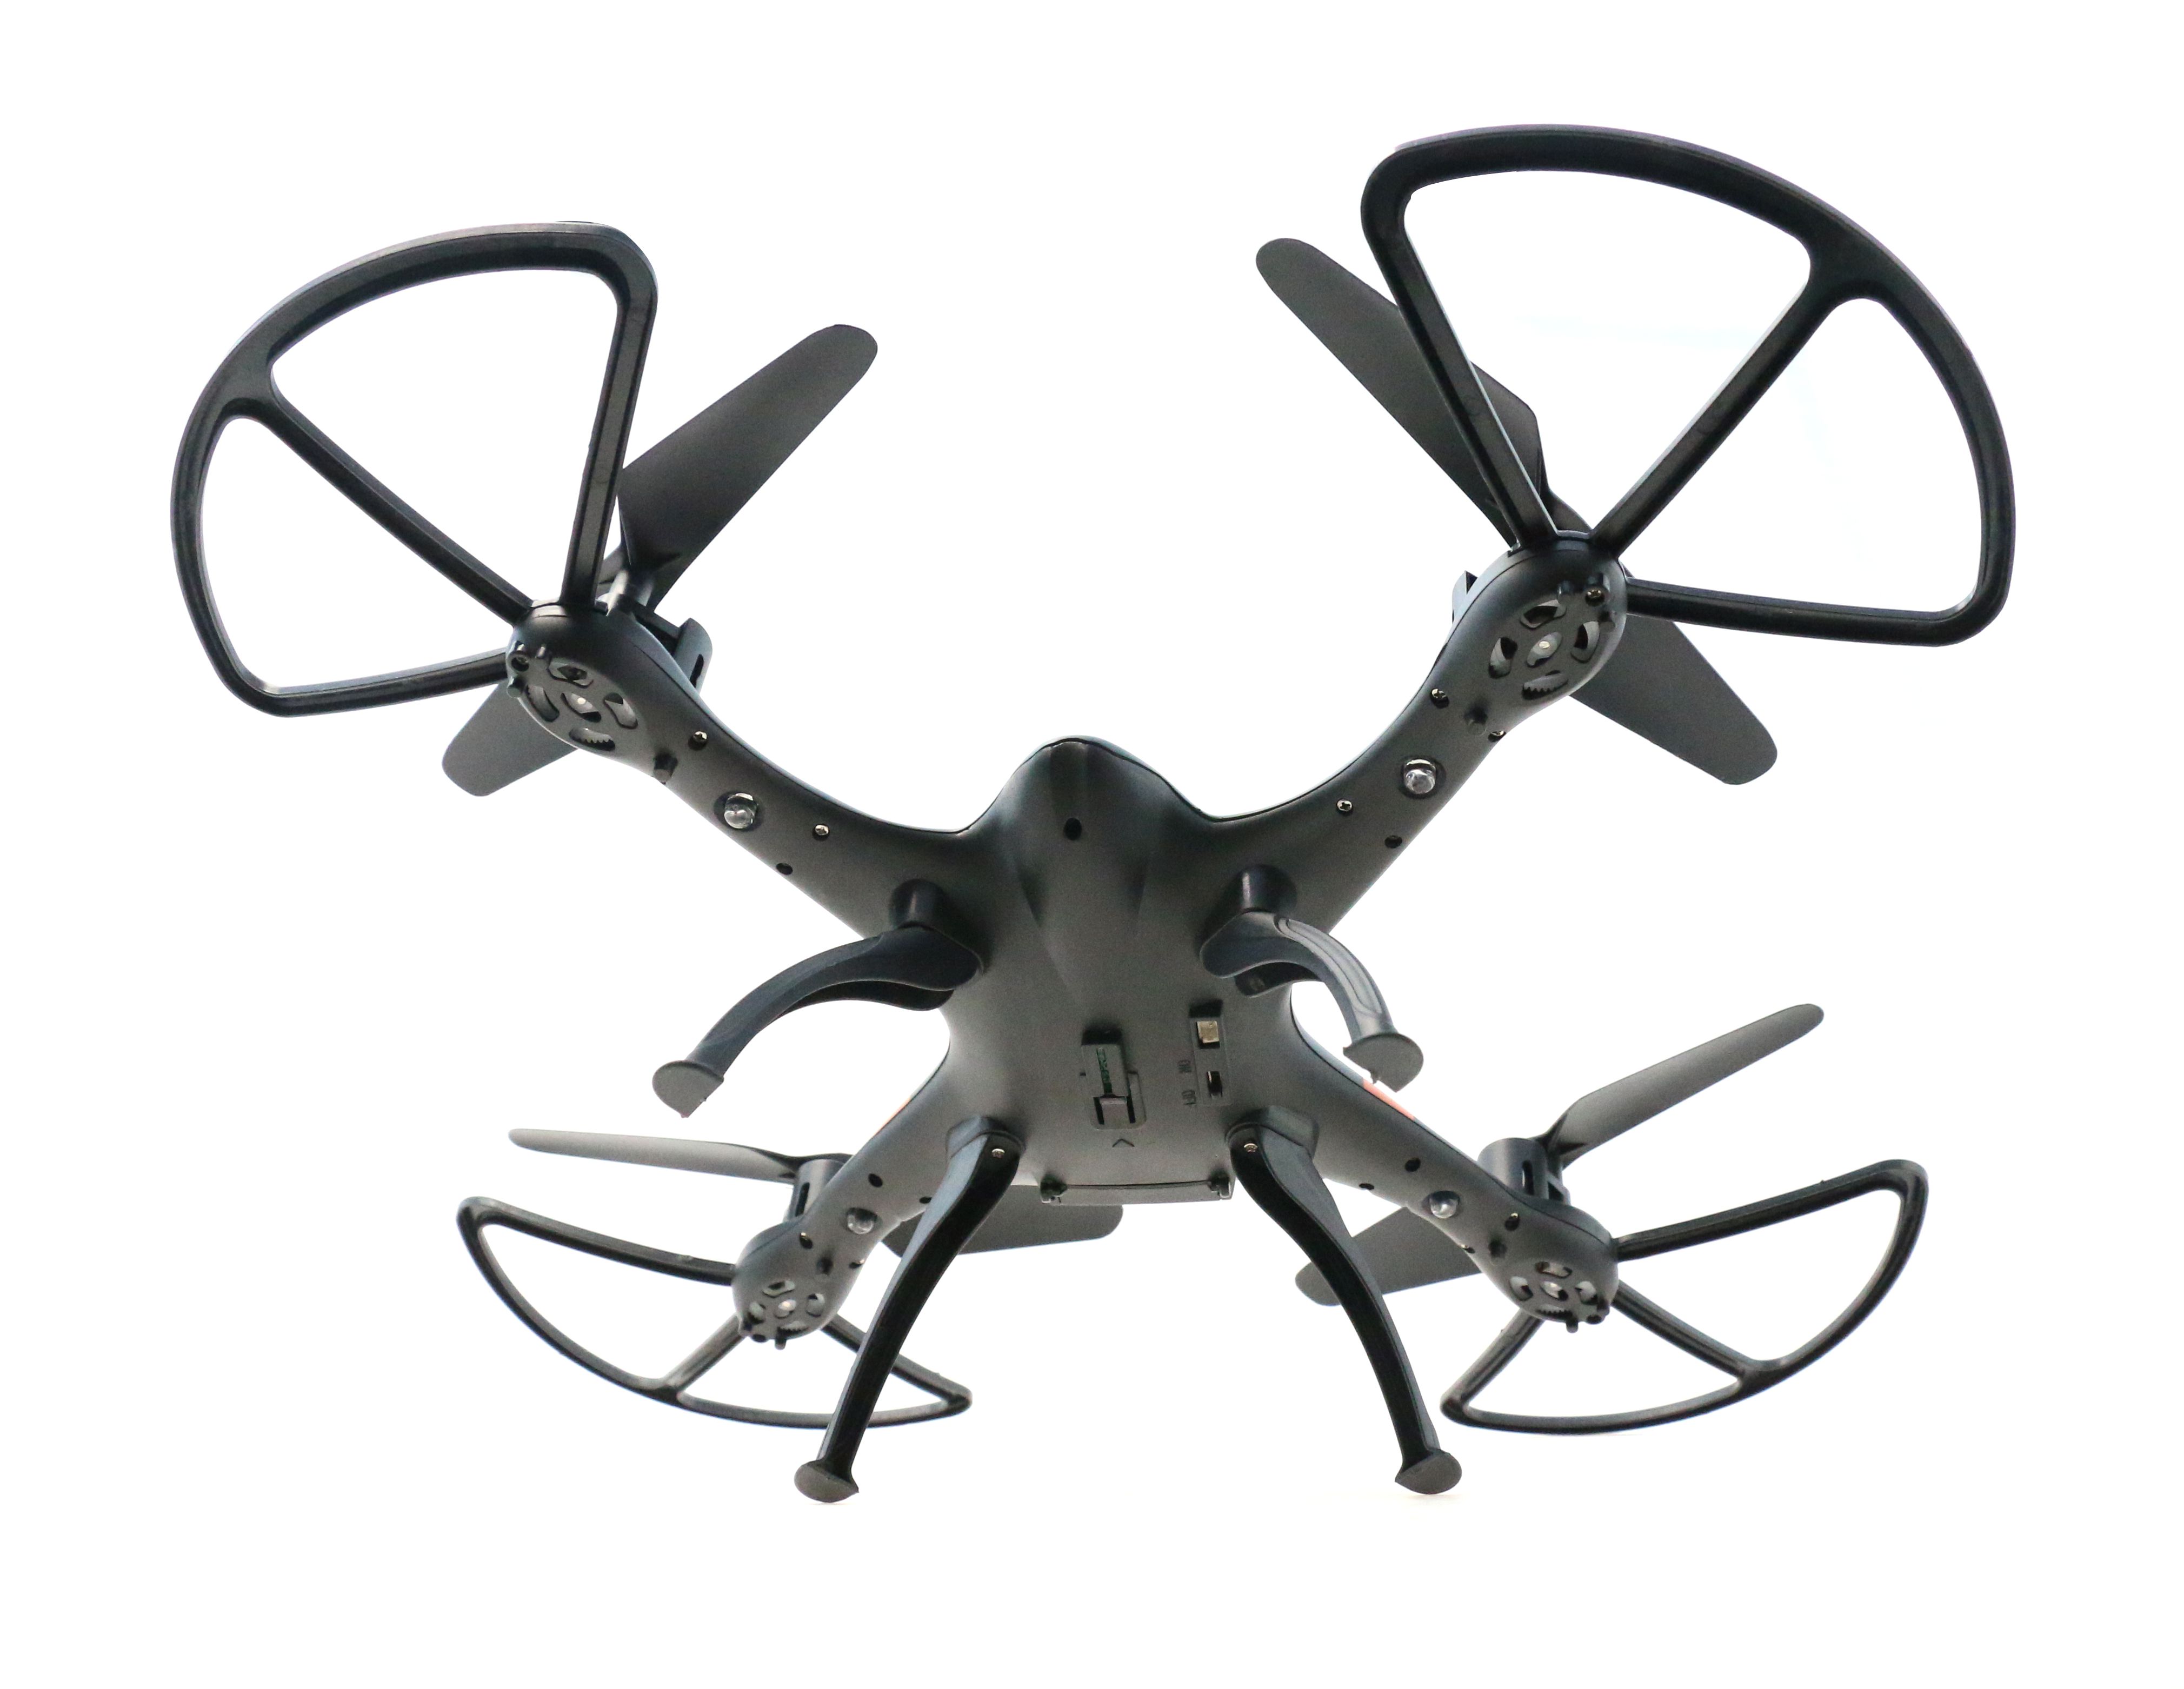  - X-Drone FPV (  WiFi 480,   - )